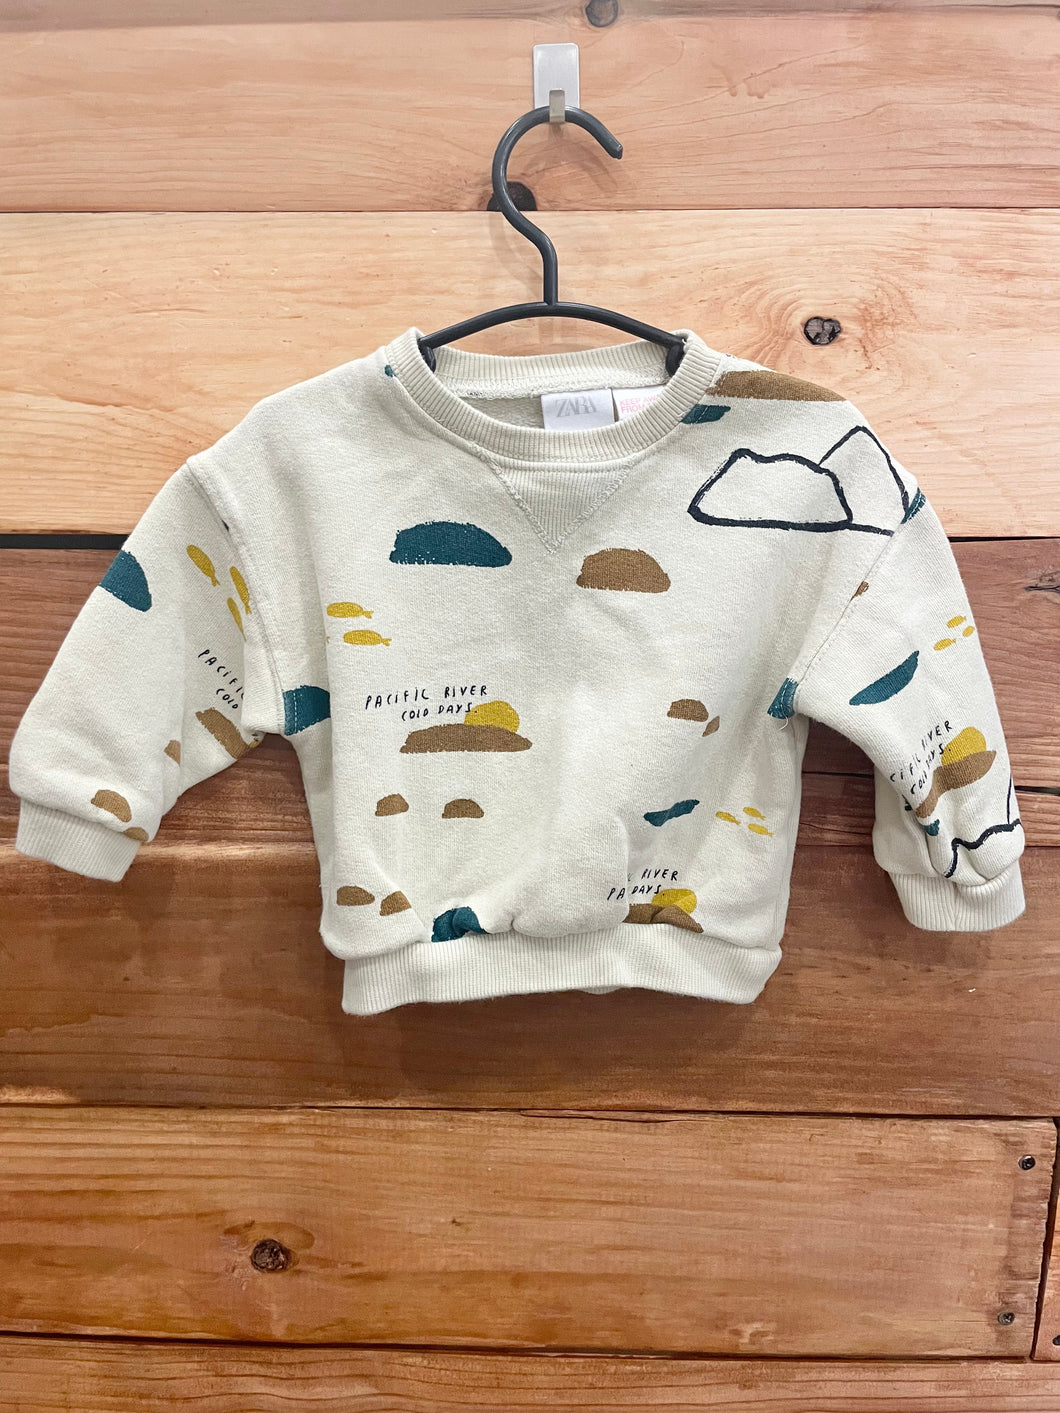 Zara Pacific River Sweatshirt Size 3-6m